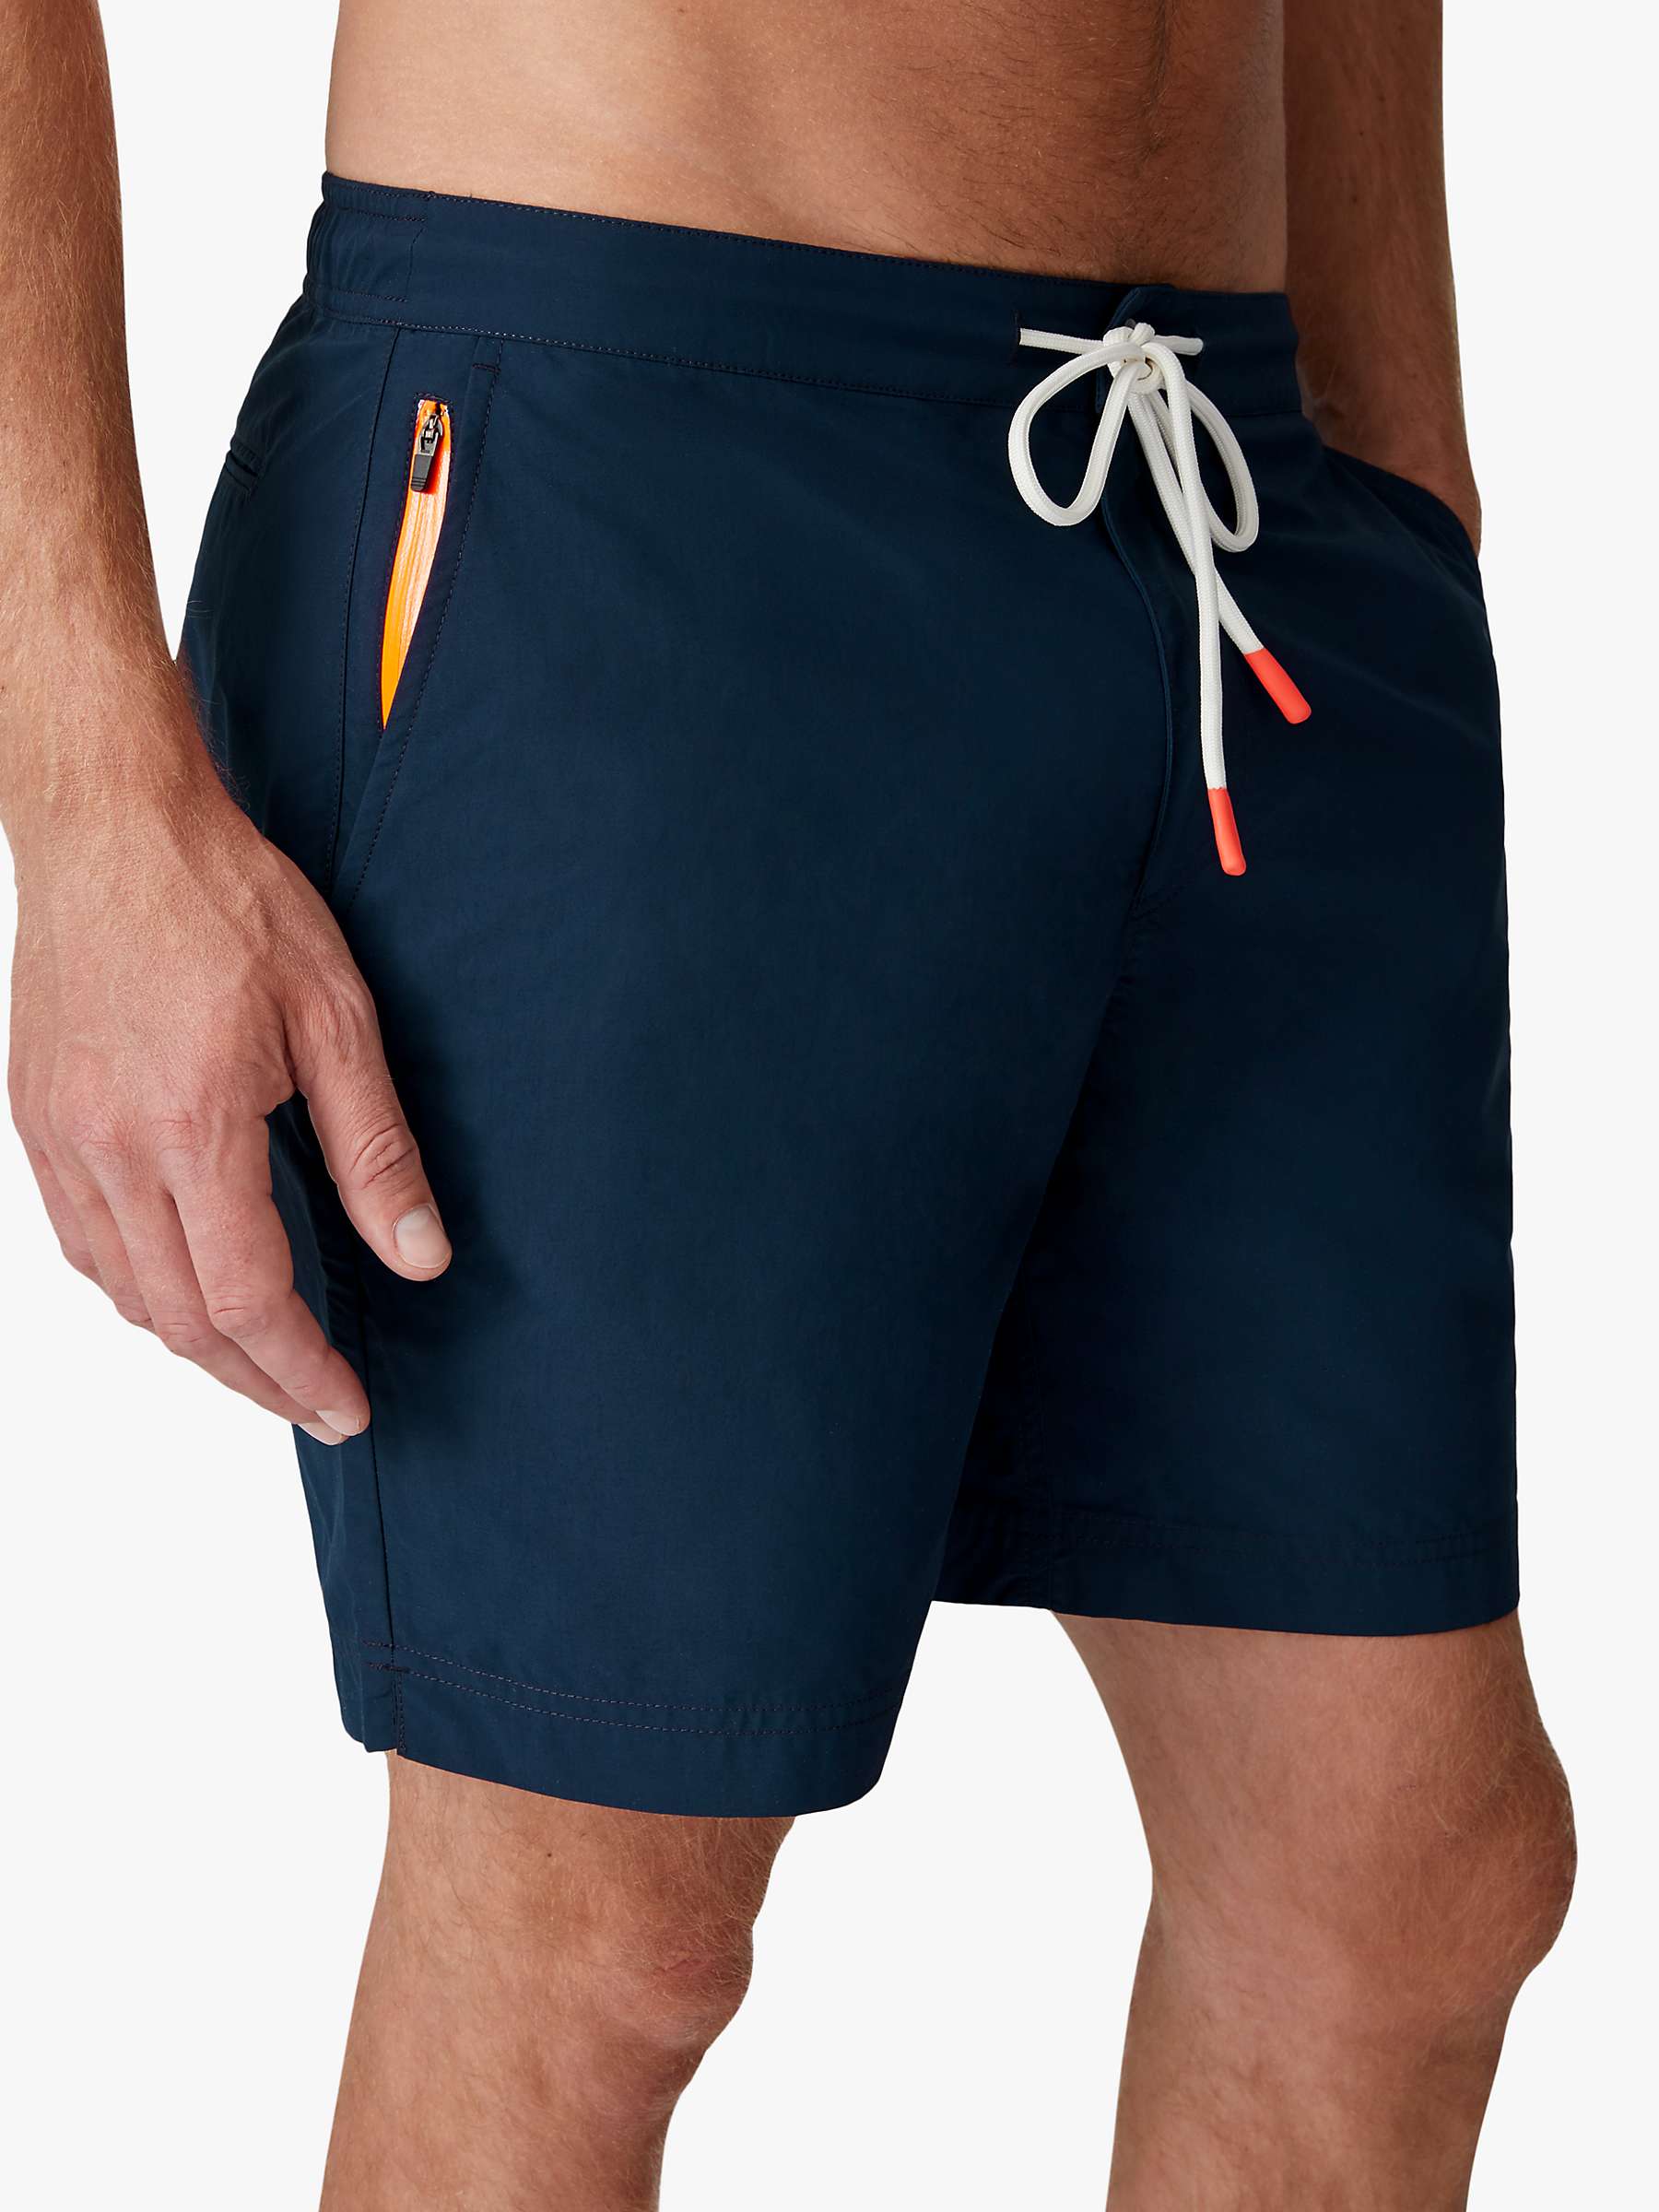 Buy SPOKE Swims Narrow Thigh Swim Shorts, Navy Online at johnlewis.com